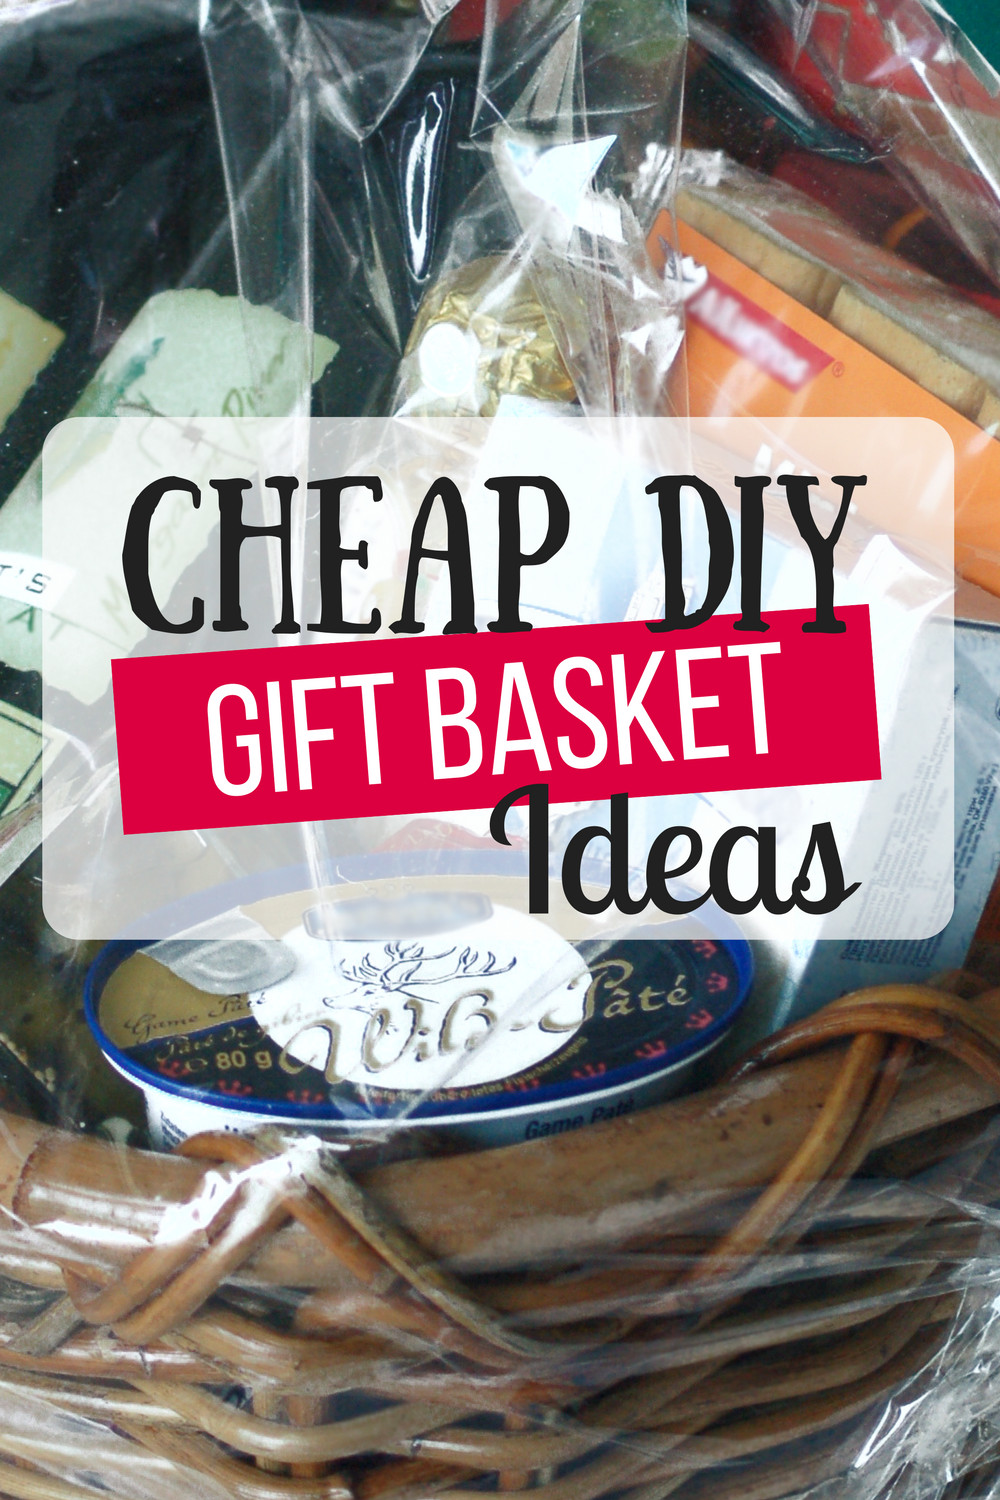 DIY Christmas Gift Baskets Ideas
 Cheap DIY Gift Baskets The Busy Bud er